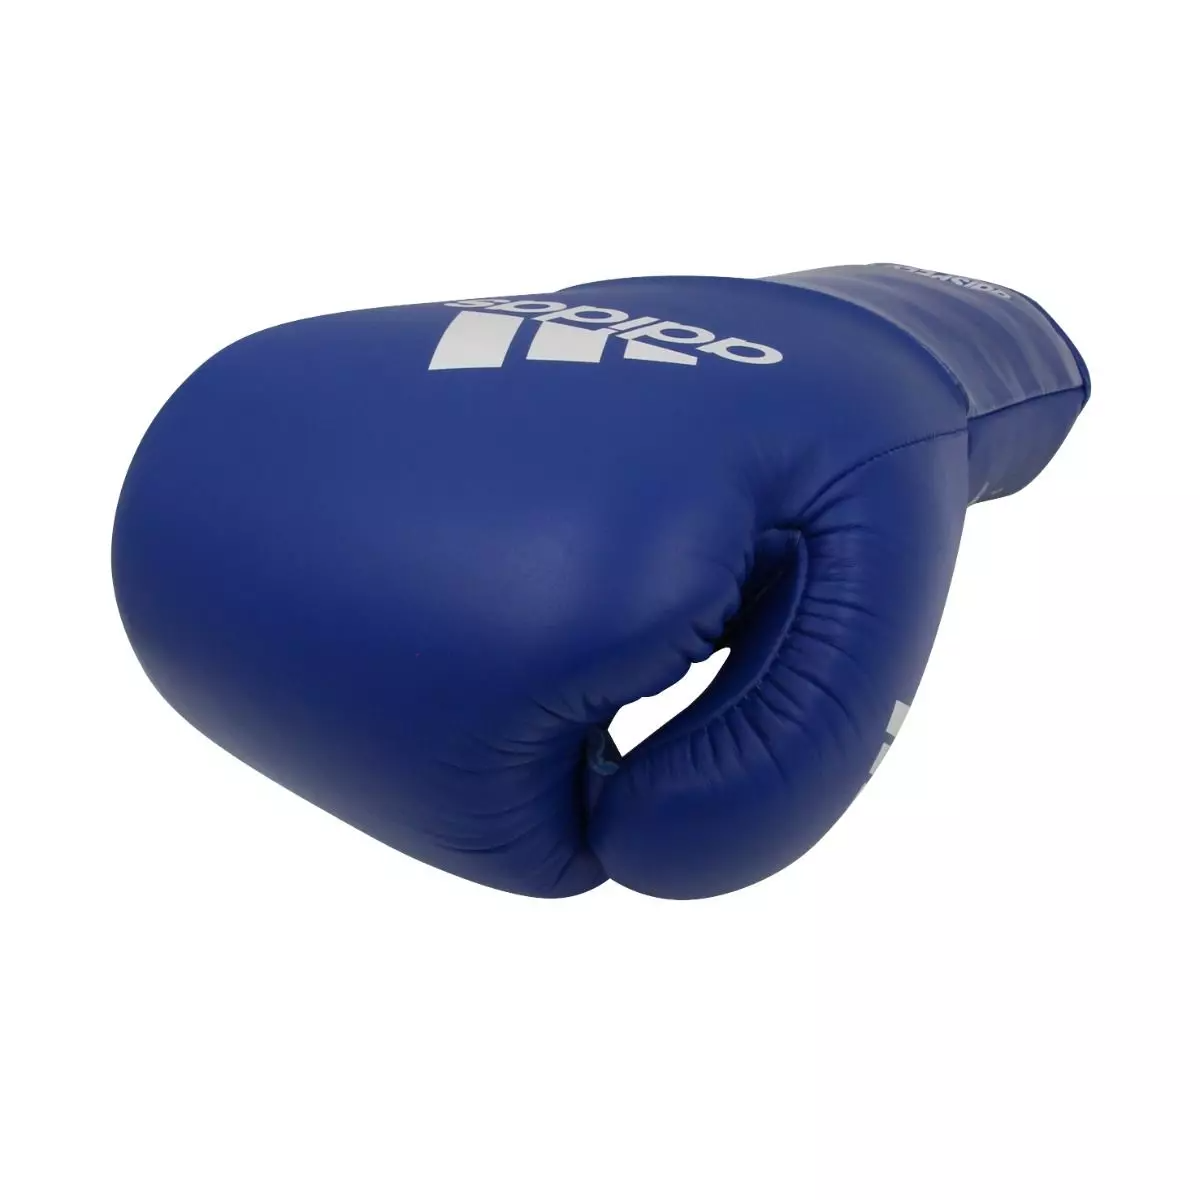 adidas Adispeed Pro Lace Up Boxing Gloves Leather